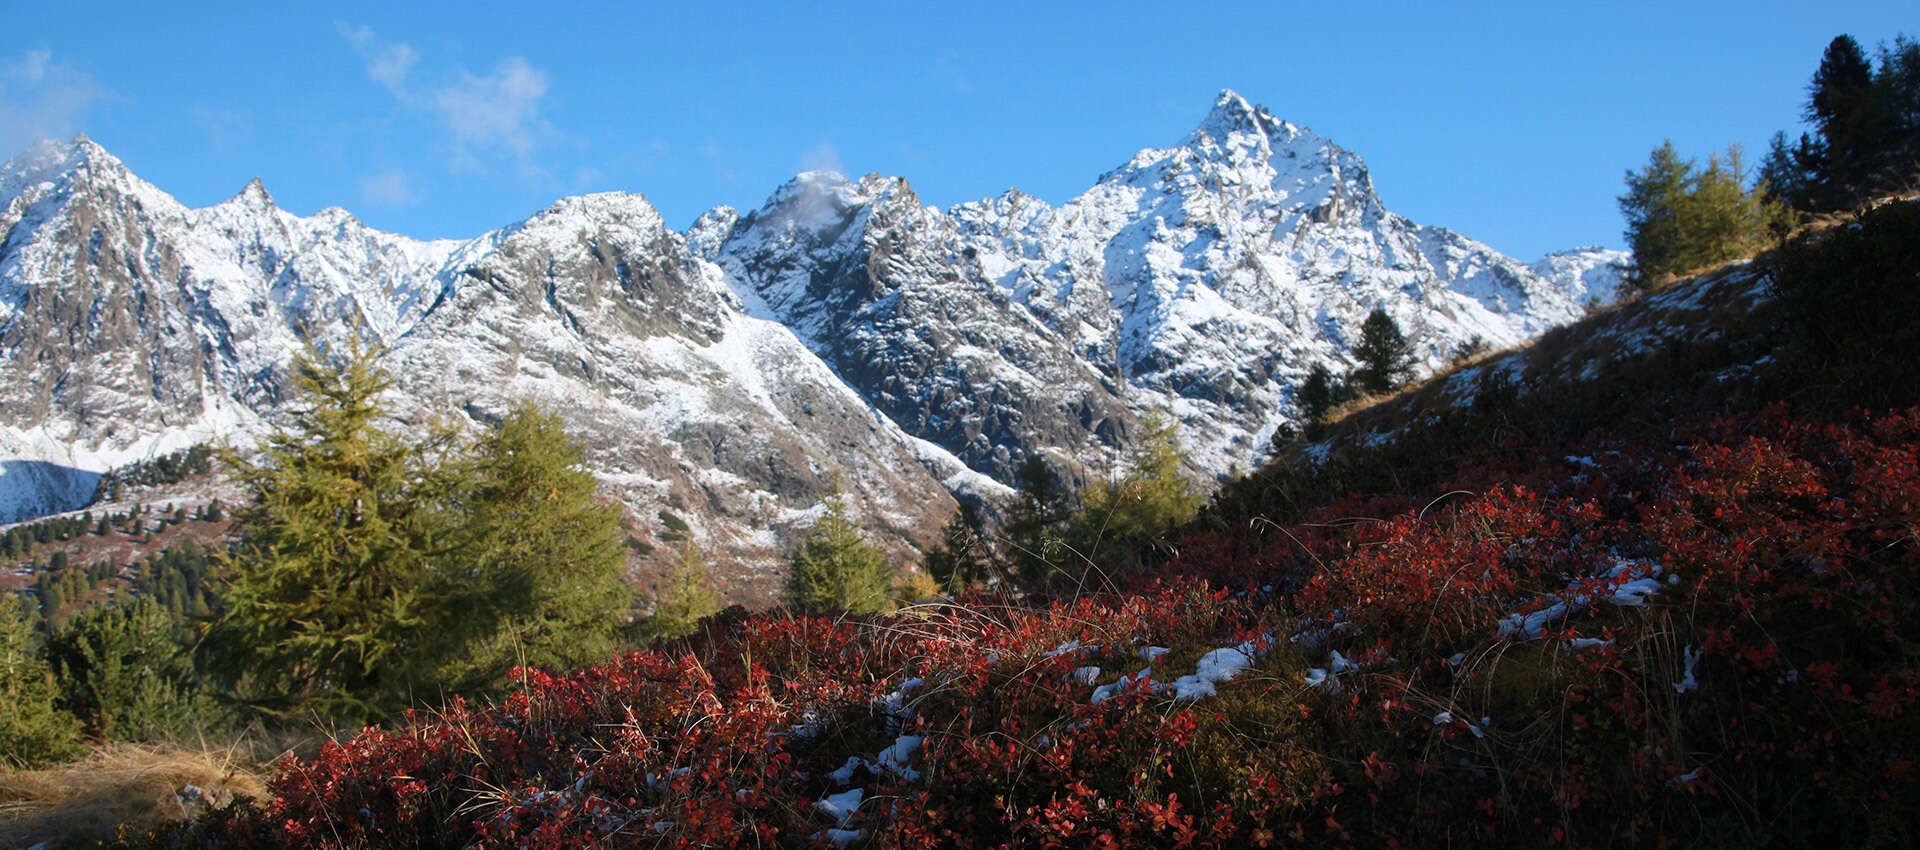  Ischgl Paznaun mountains